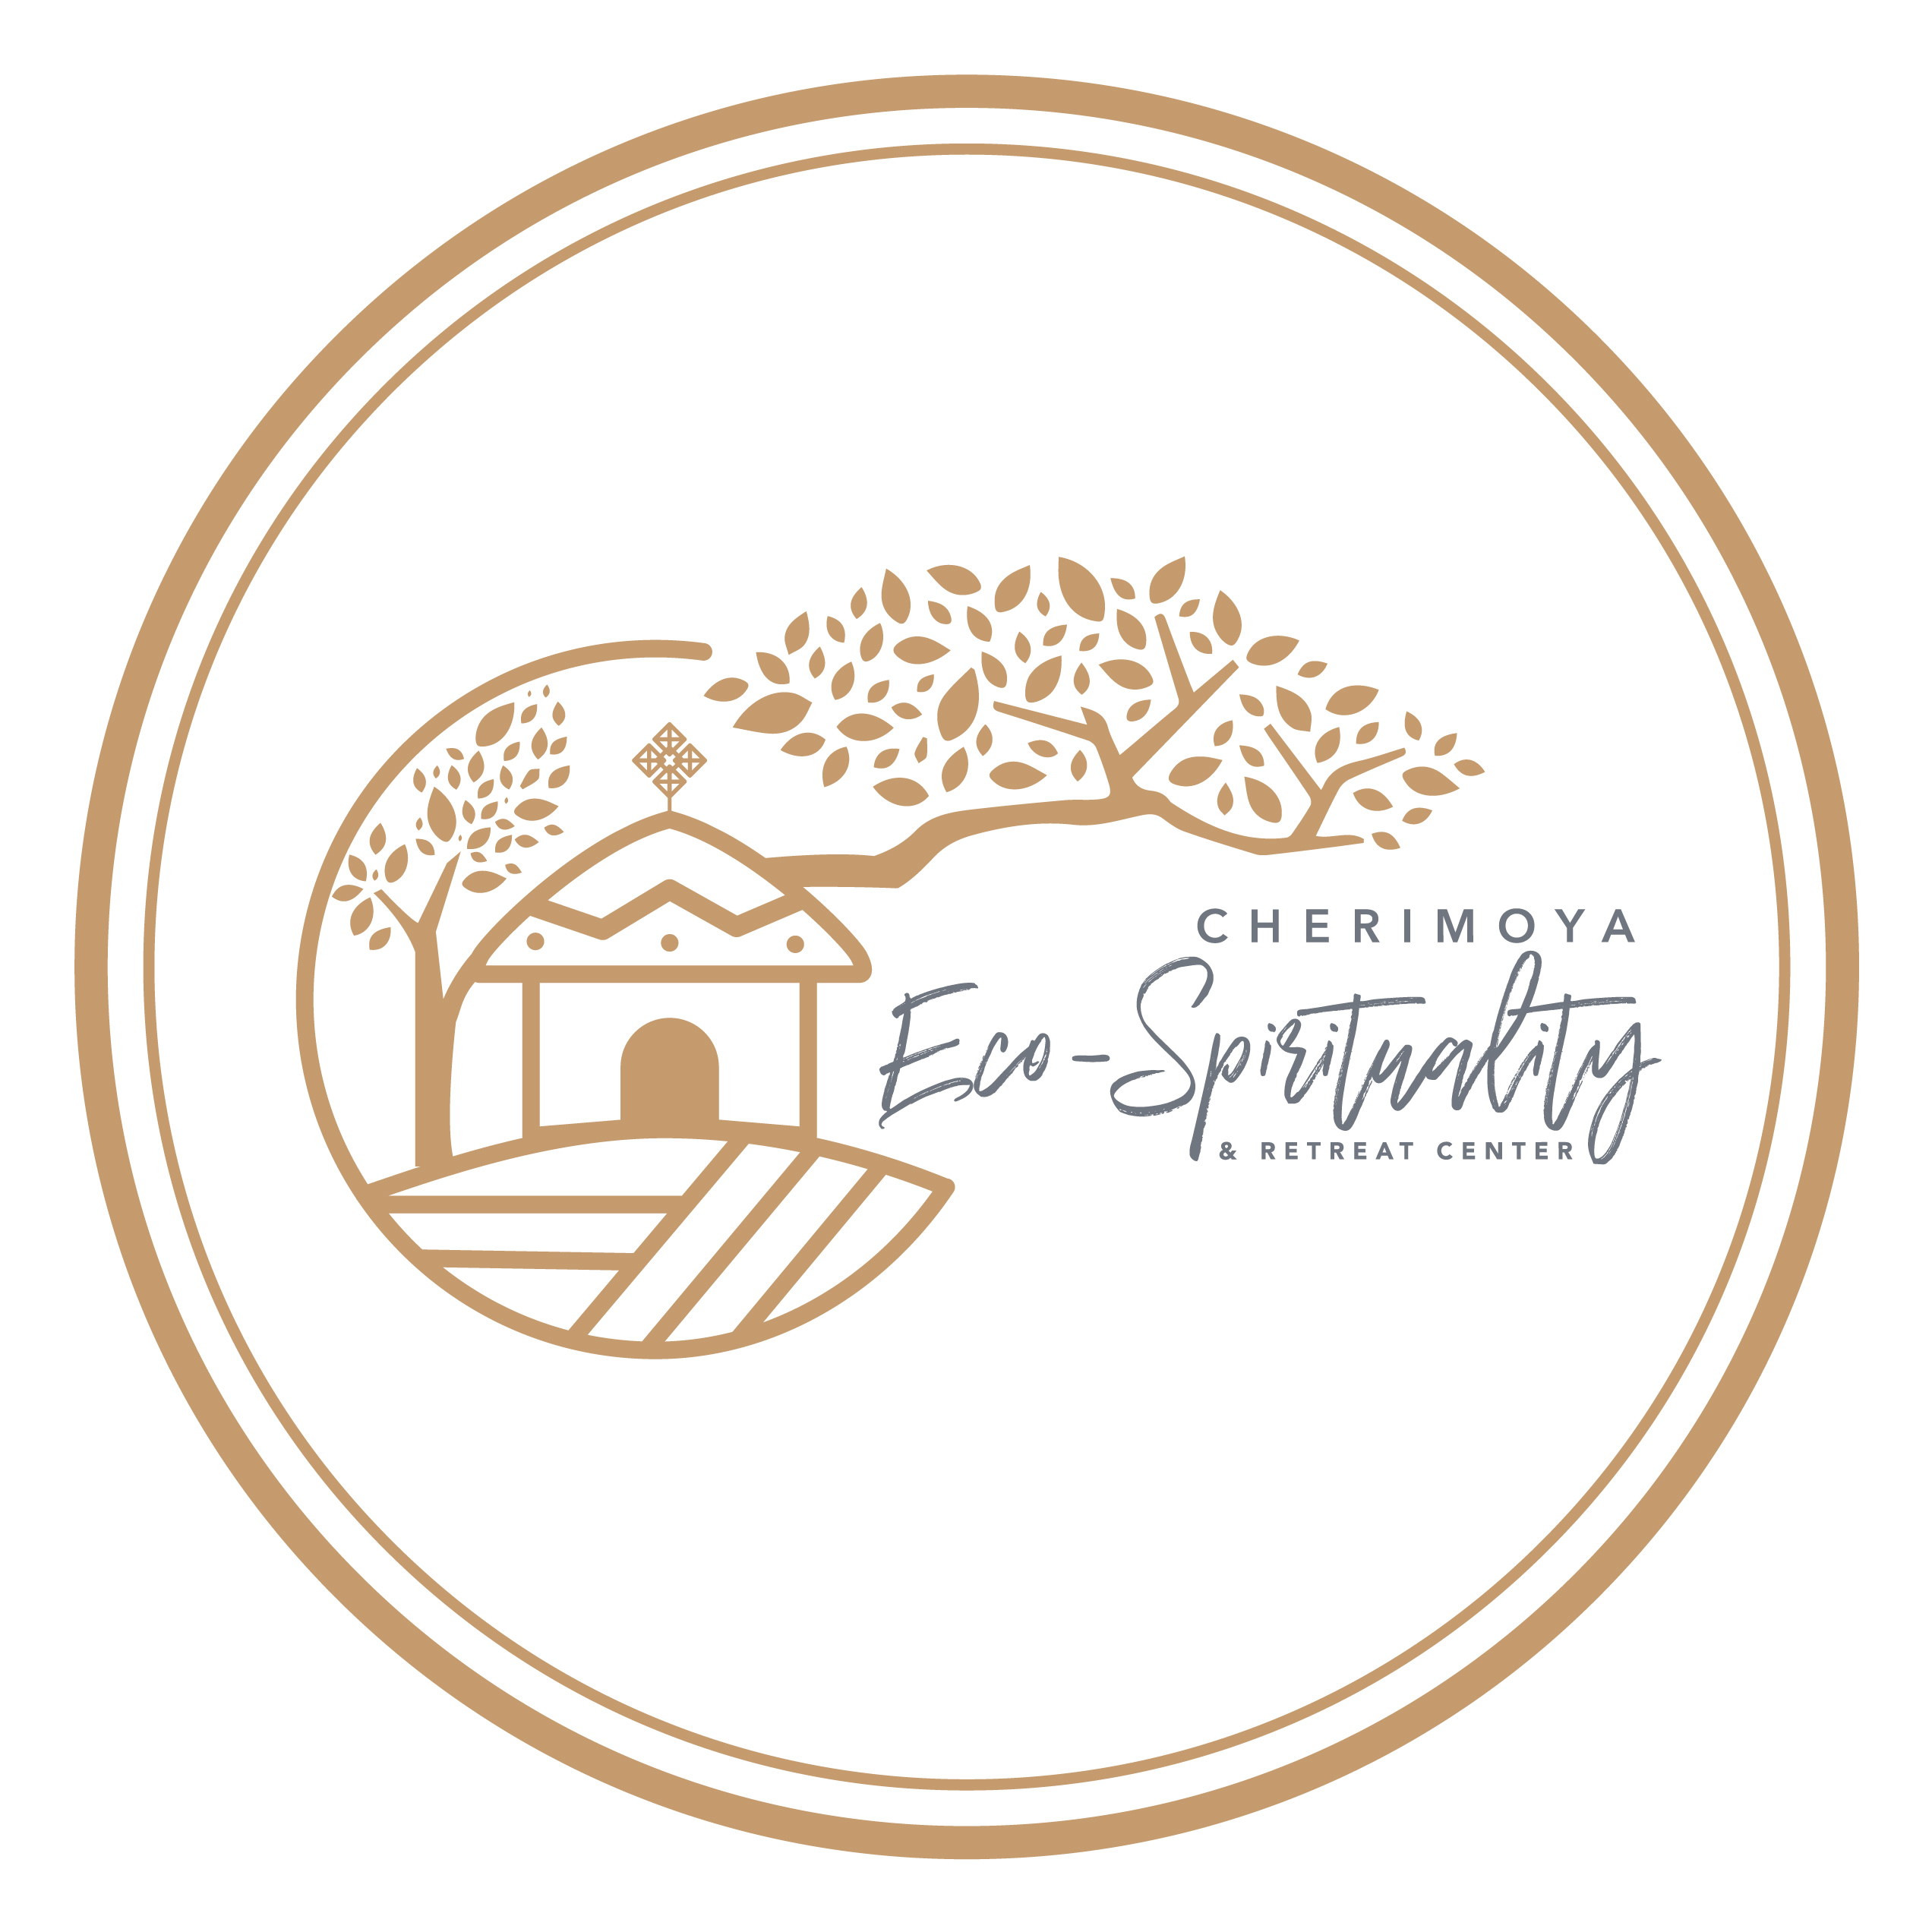 Cherimoya Eco-Spirituality & Retreat Center